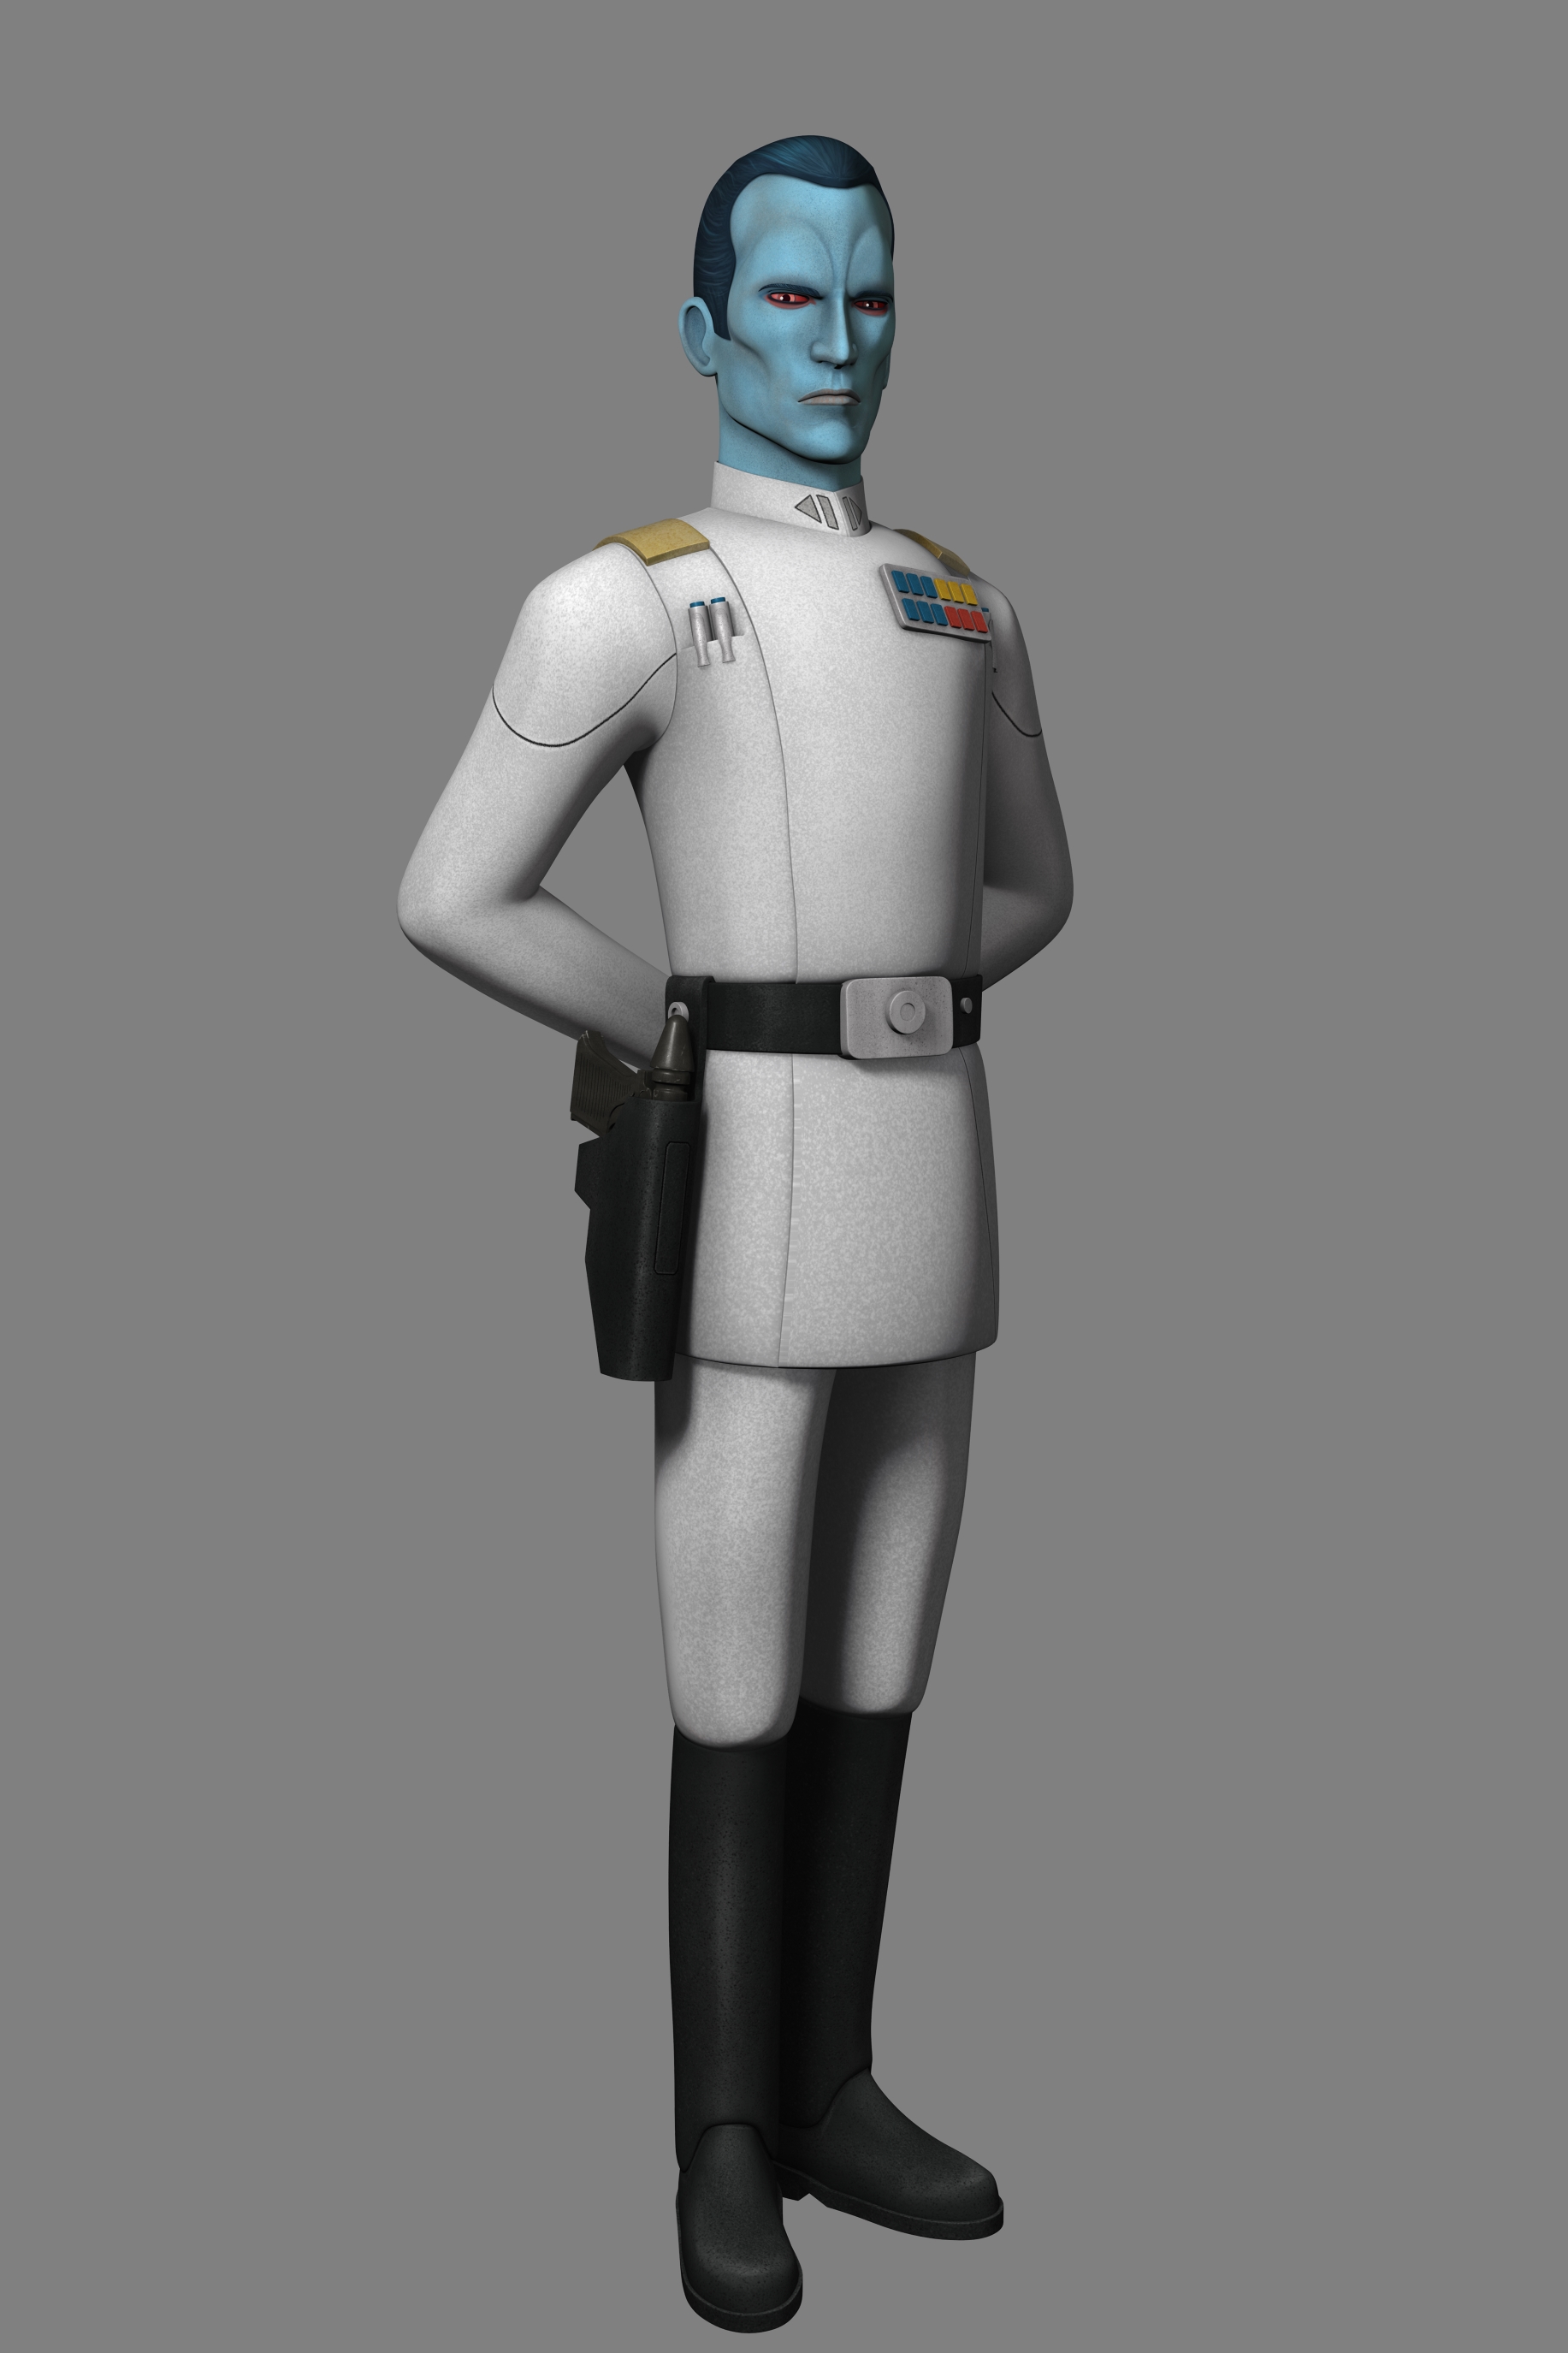 Grand Admiral Thrawn (Mitth raw nuruodo)